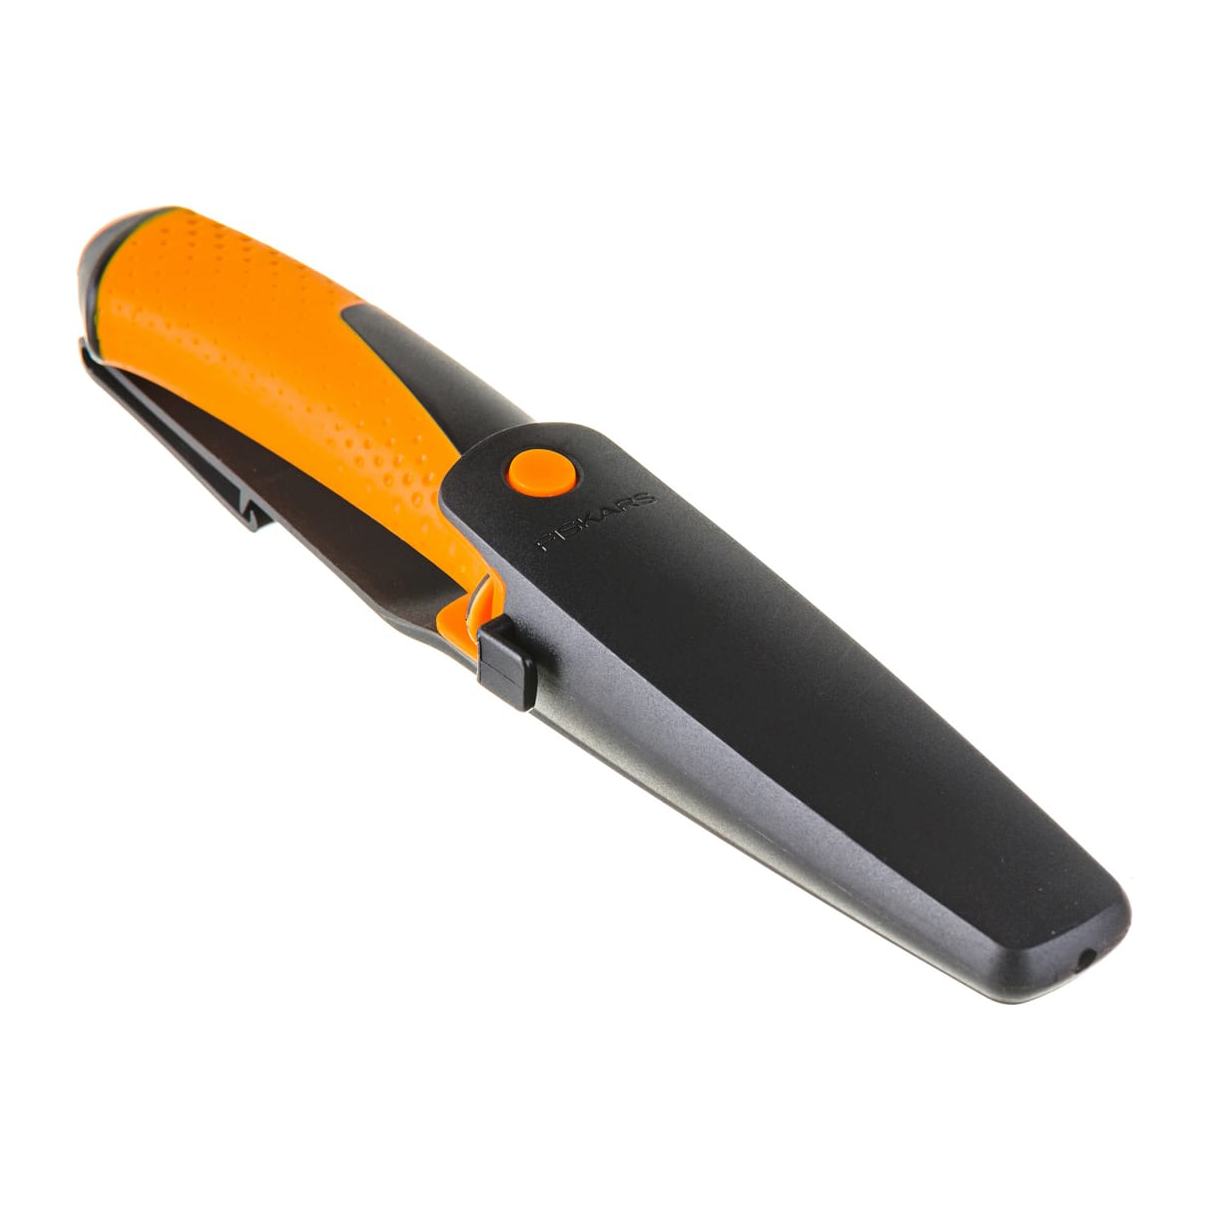 Универсальный нож с точилкой Fiskars 1023618 Fiskars от магазина Tehnorama